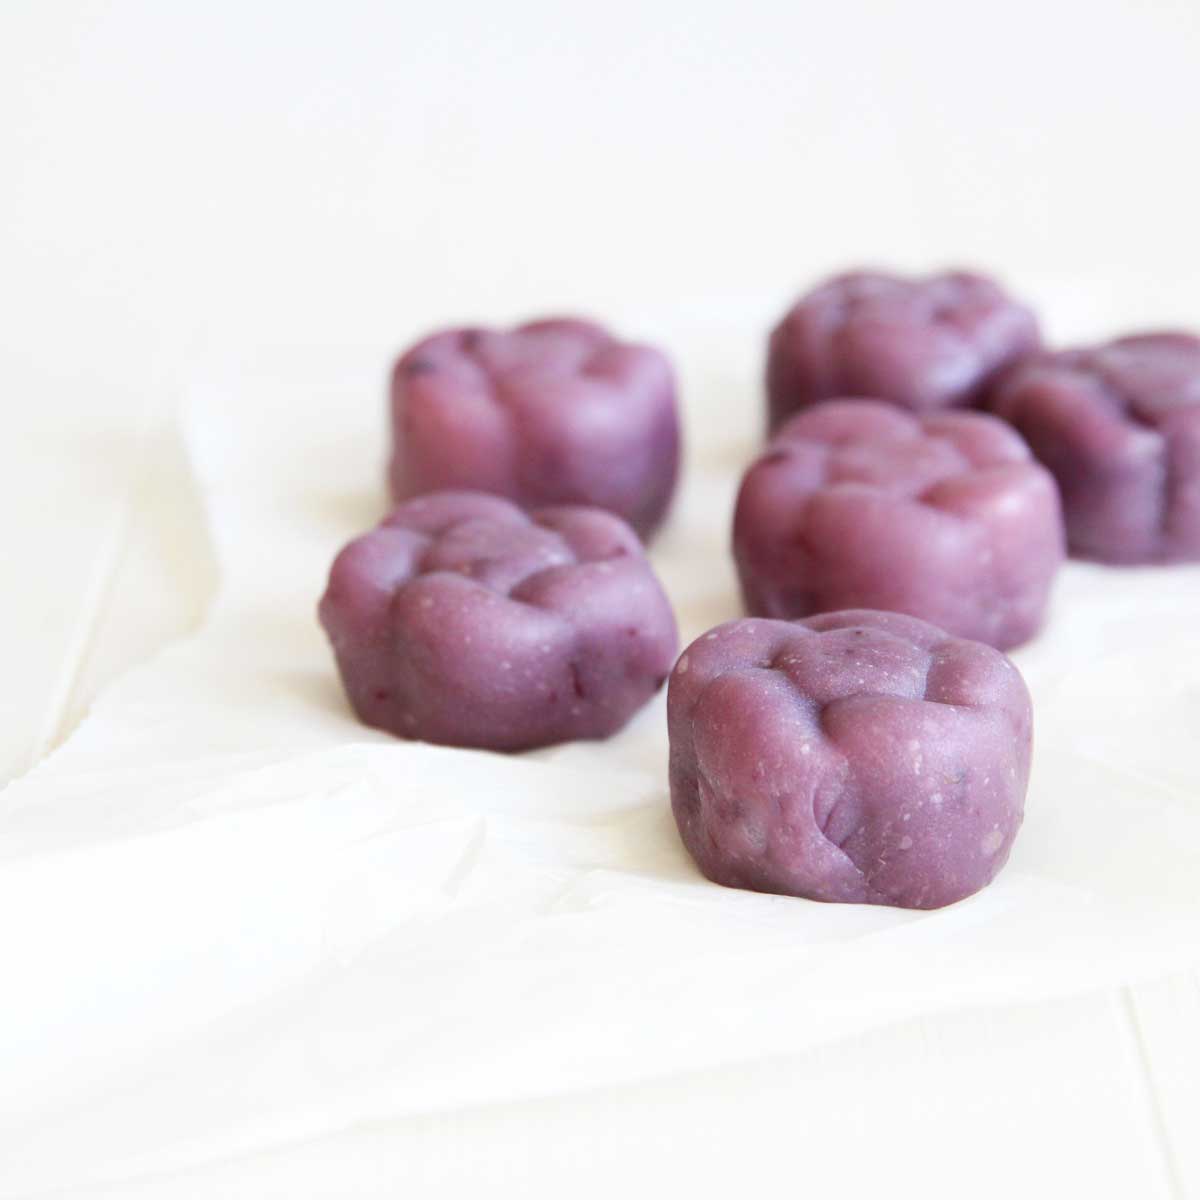 The Best Vegan Purple Sweet Potato Chocolate Chip Cookie (Paleo) - sweet potato cookie